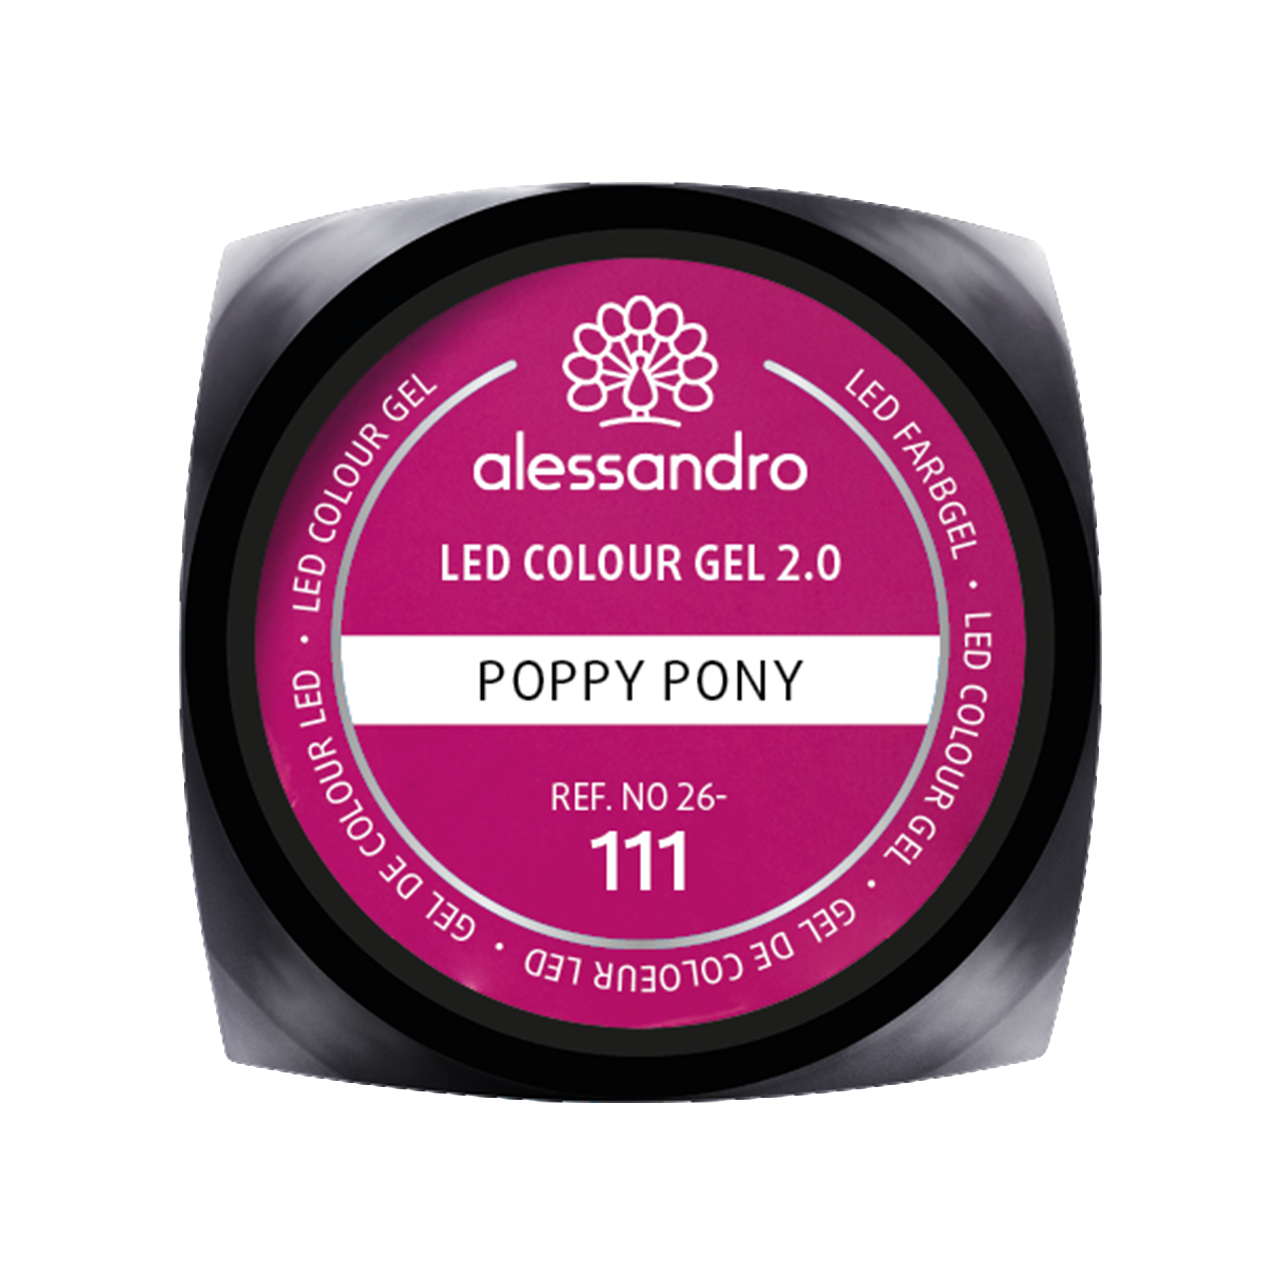 Colour Gel Poppy Pony 5g